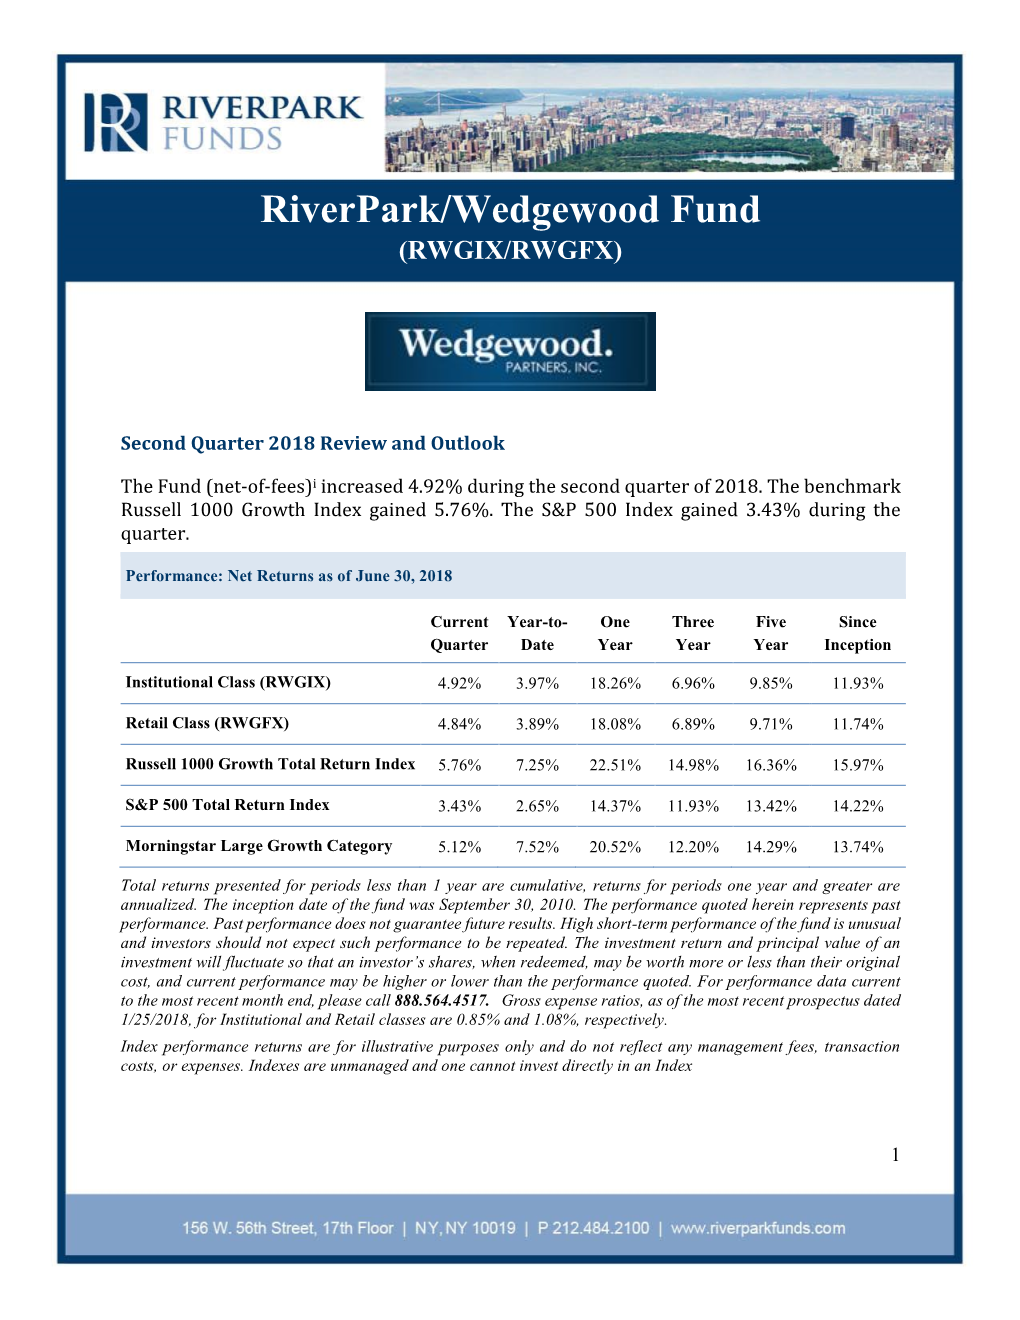 Riverpark/Wedgewood Fund (RWGIX/RWGFX)